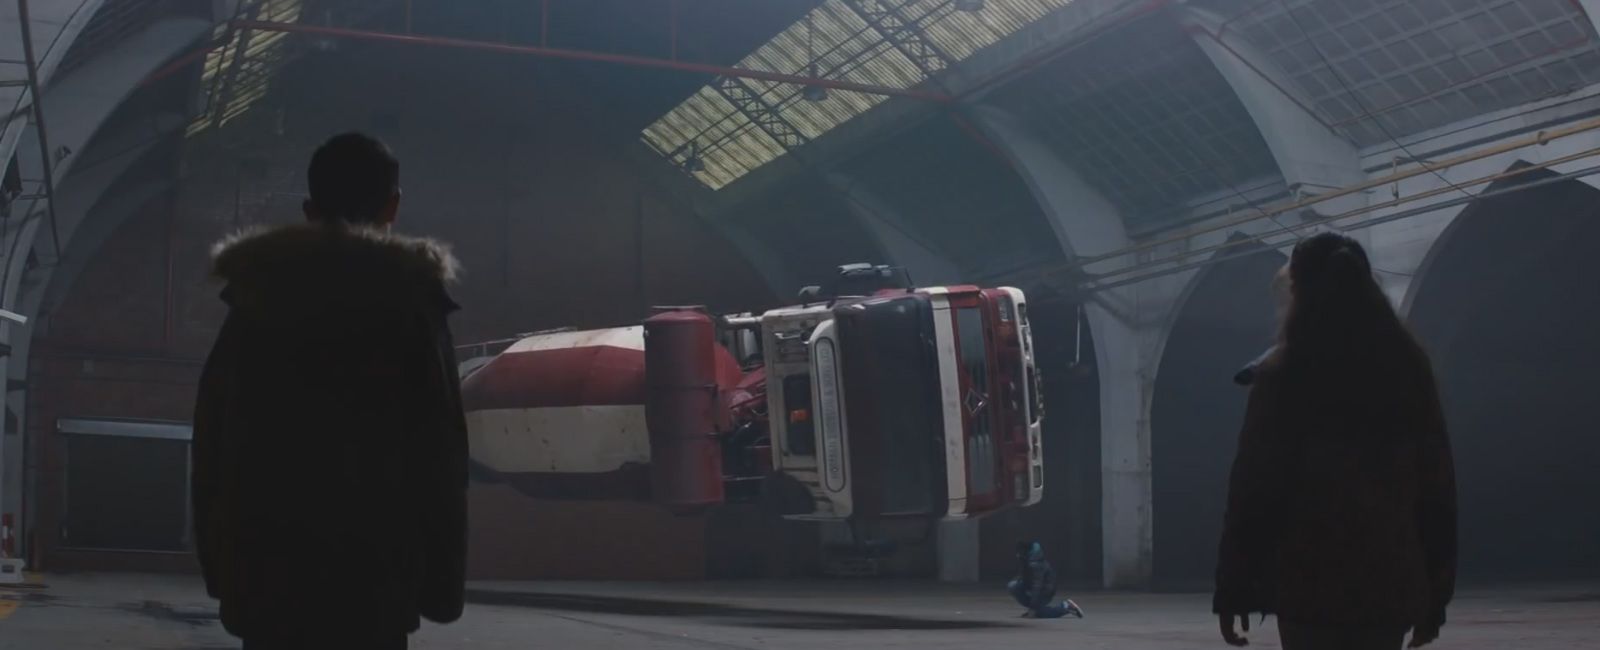 Thor 2 The Dark World Trailer Still Singularity Floating Truck